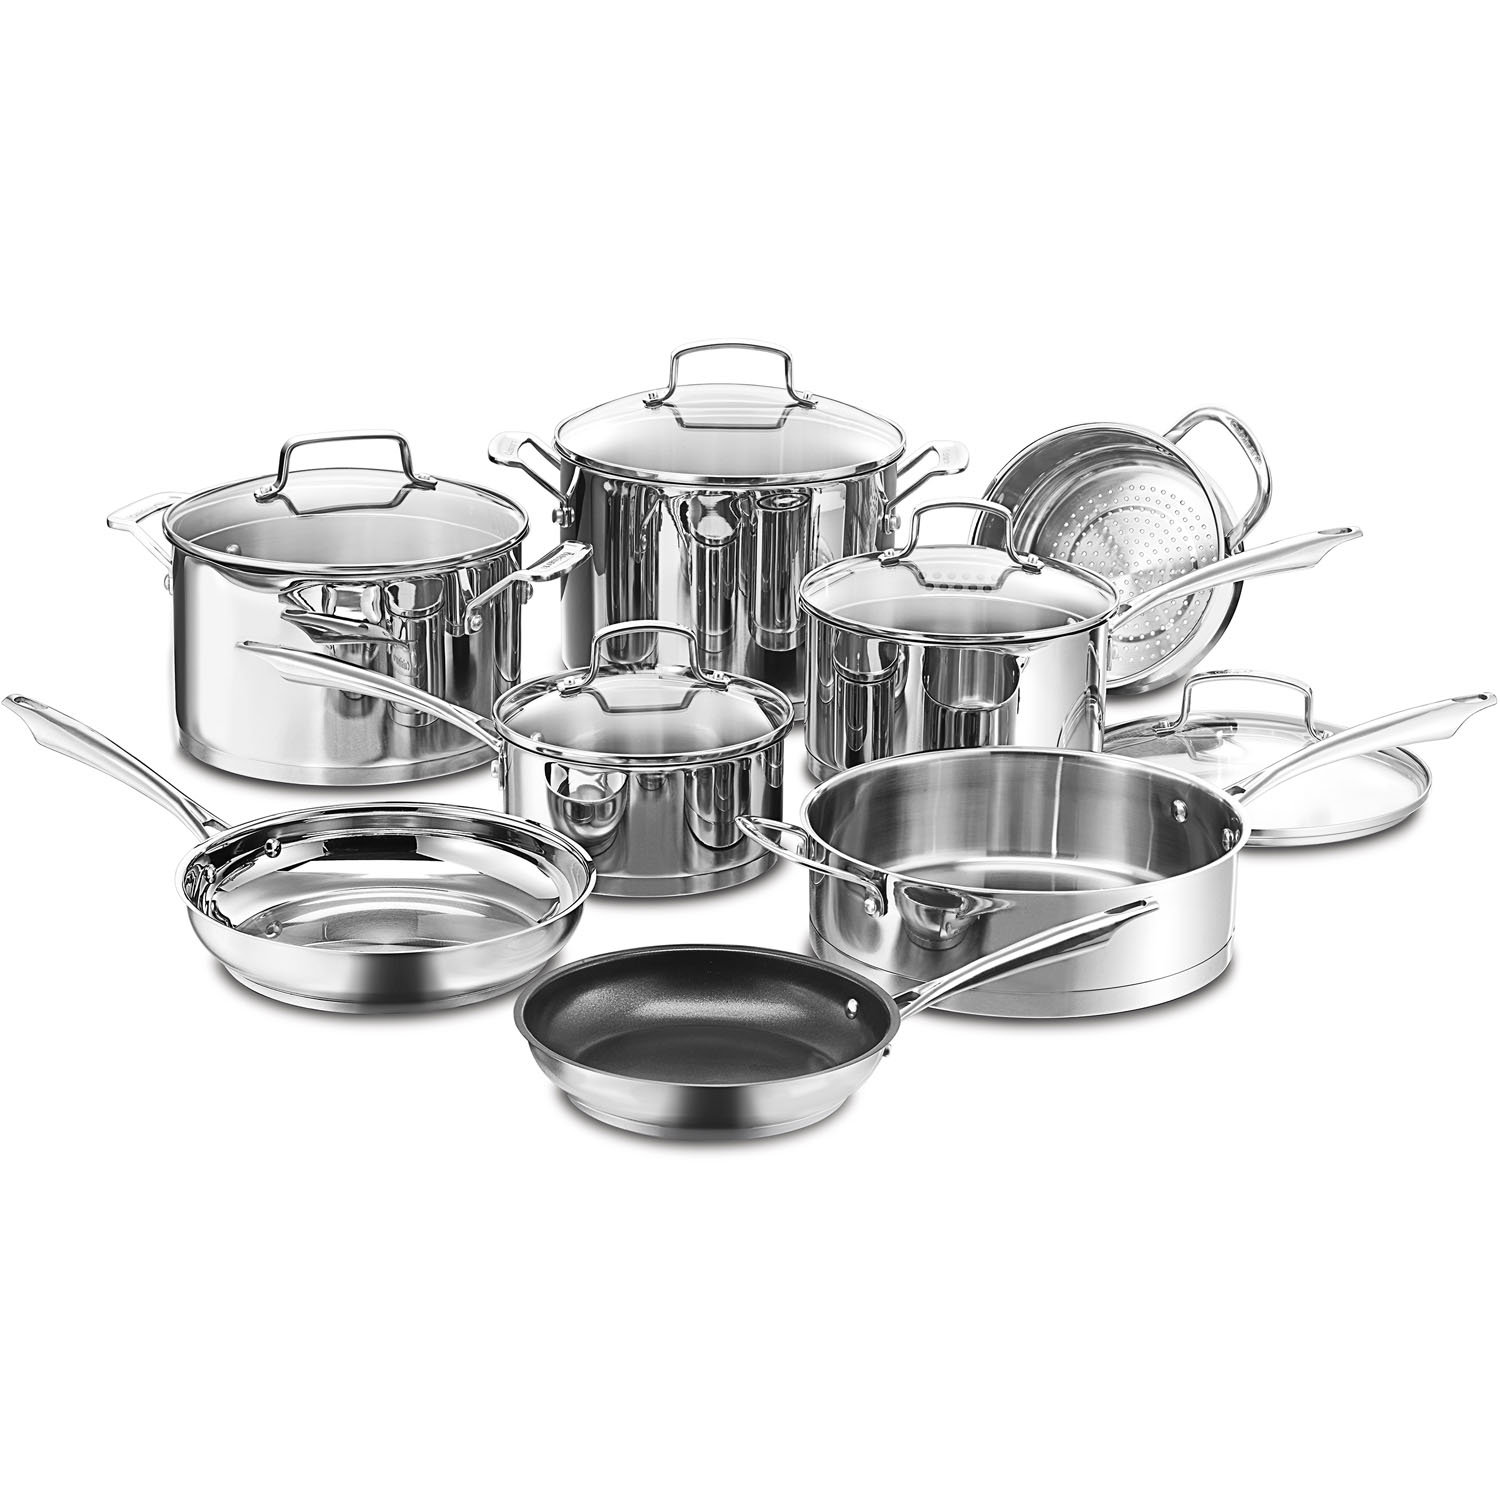 Cuisinart 17-Piece Chefs Classic Stainless Steel Cookware Set